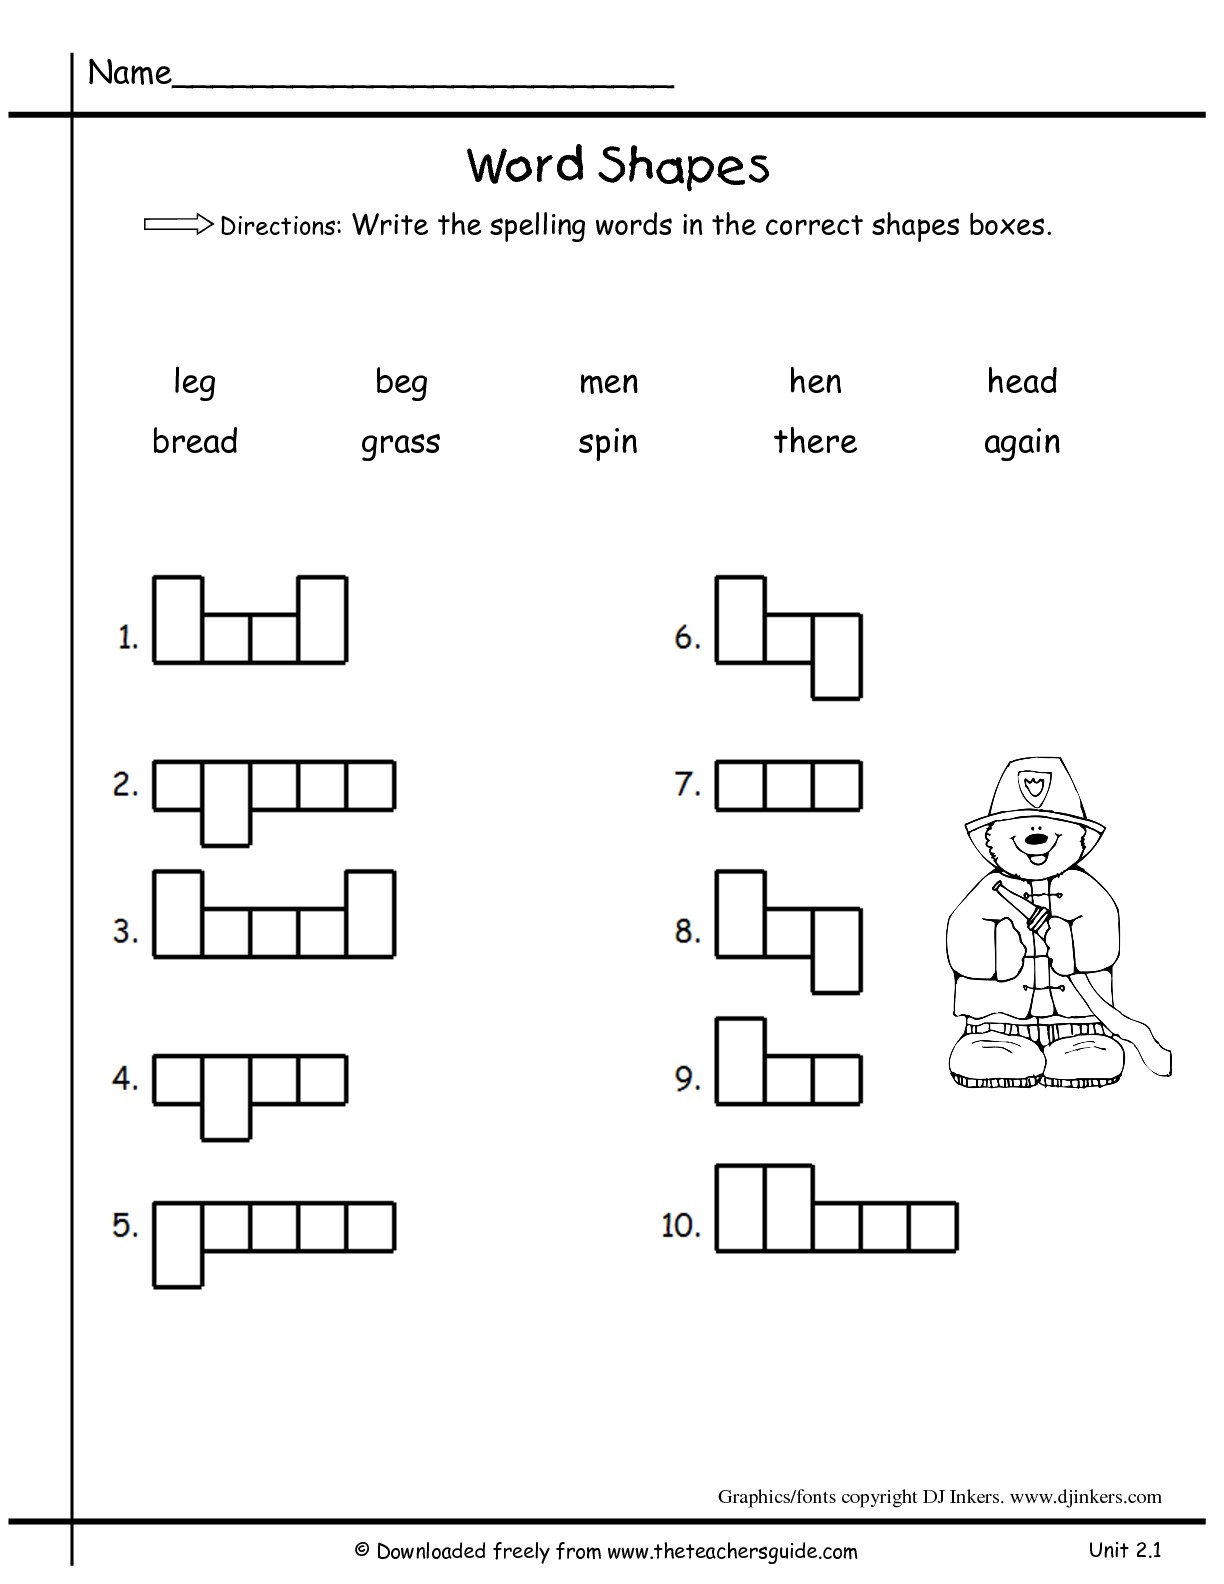 13 Best Images of College Spelling Worksheets Kindergarten Spelling